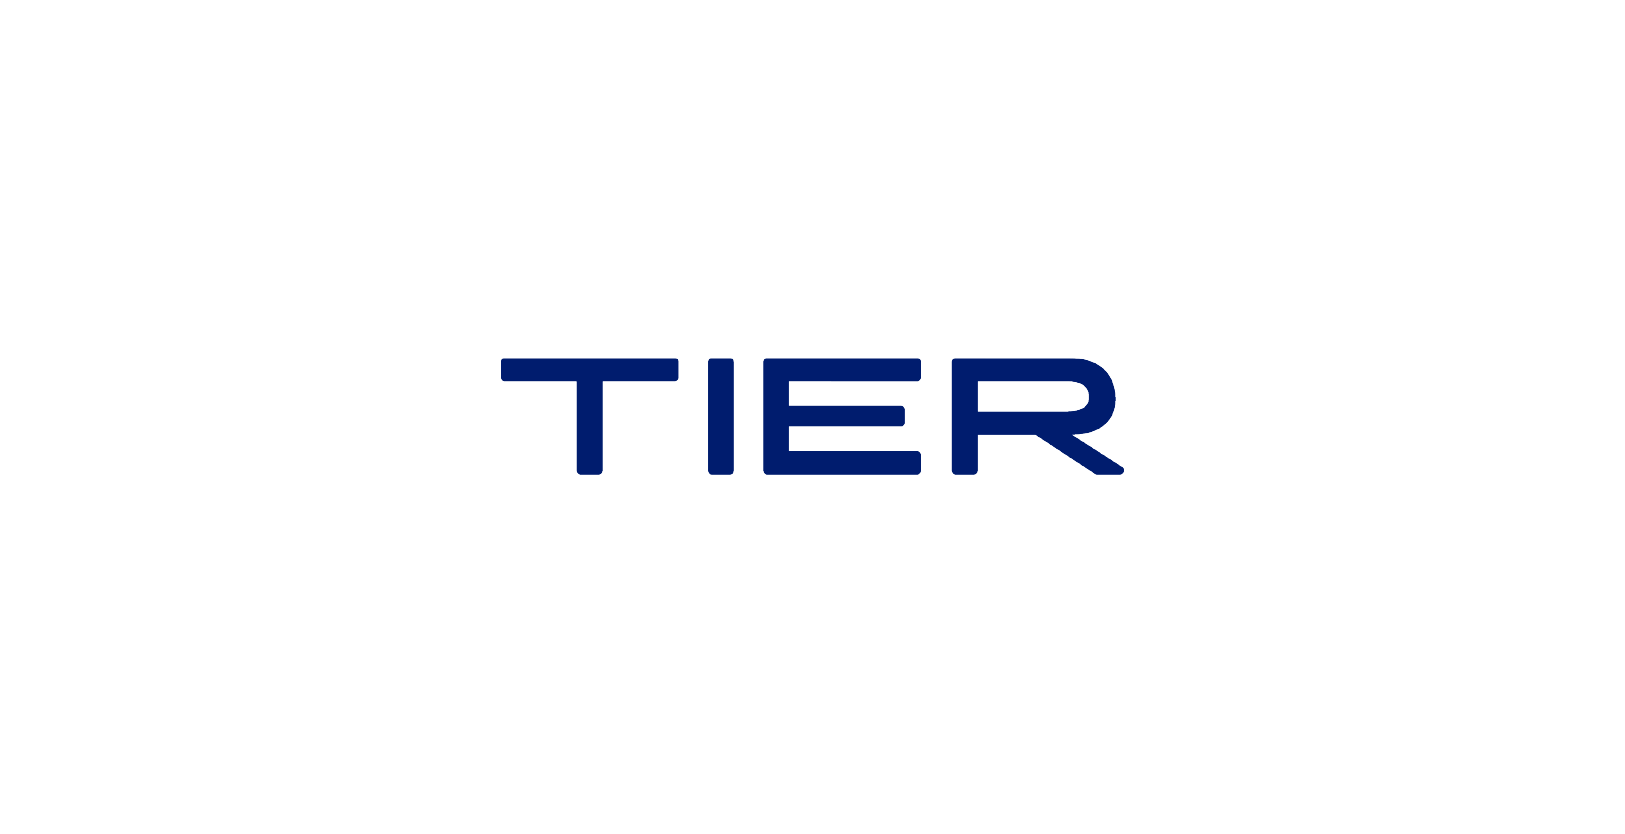 Vision Fund investment portfolio company TIER's logo